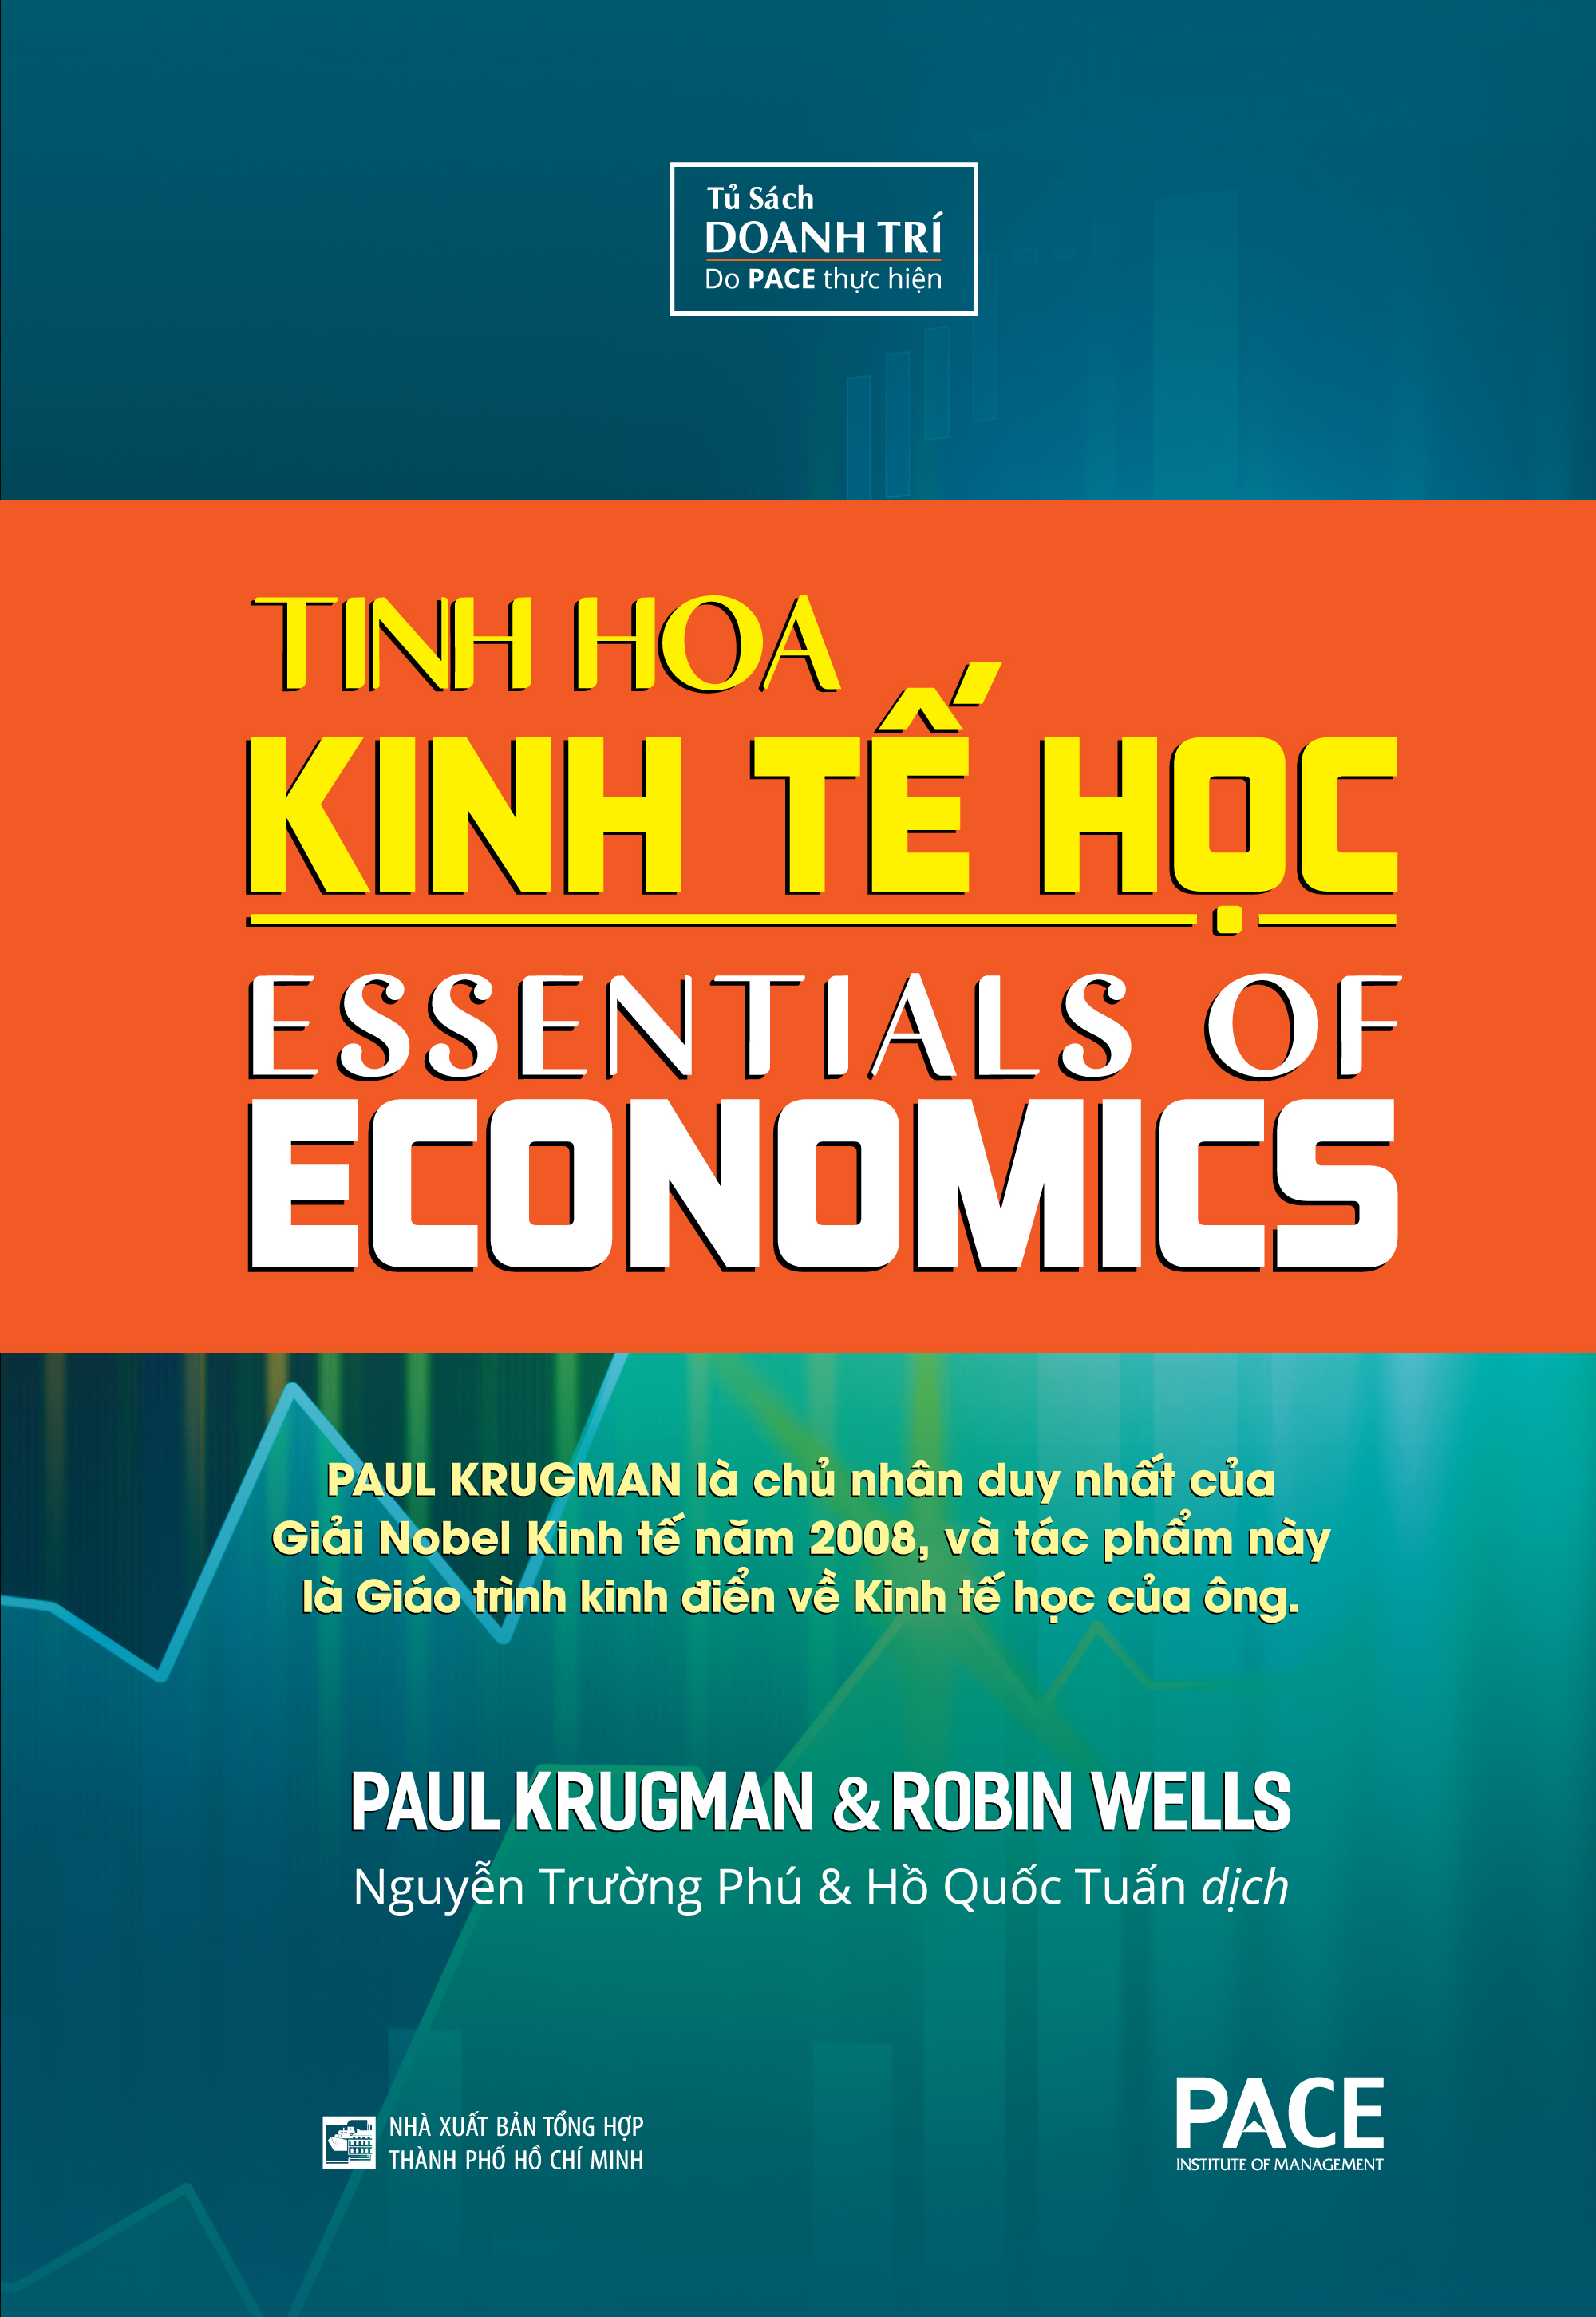 Sách PACE Books - Tinh hoa kinh tế học (Essentials Of Economics) - Paul Krugman, Robin Wells